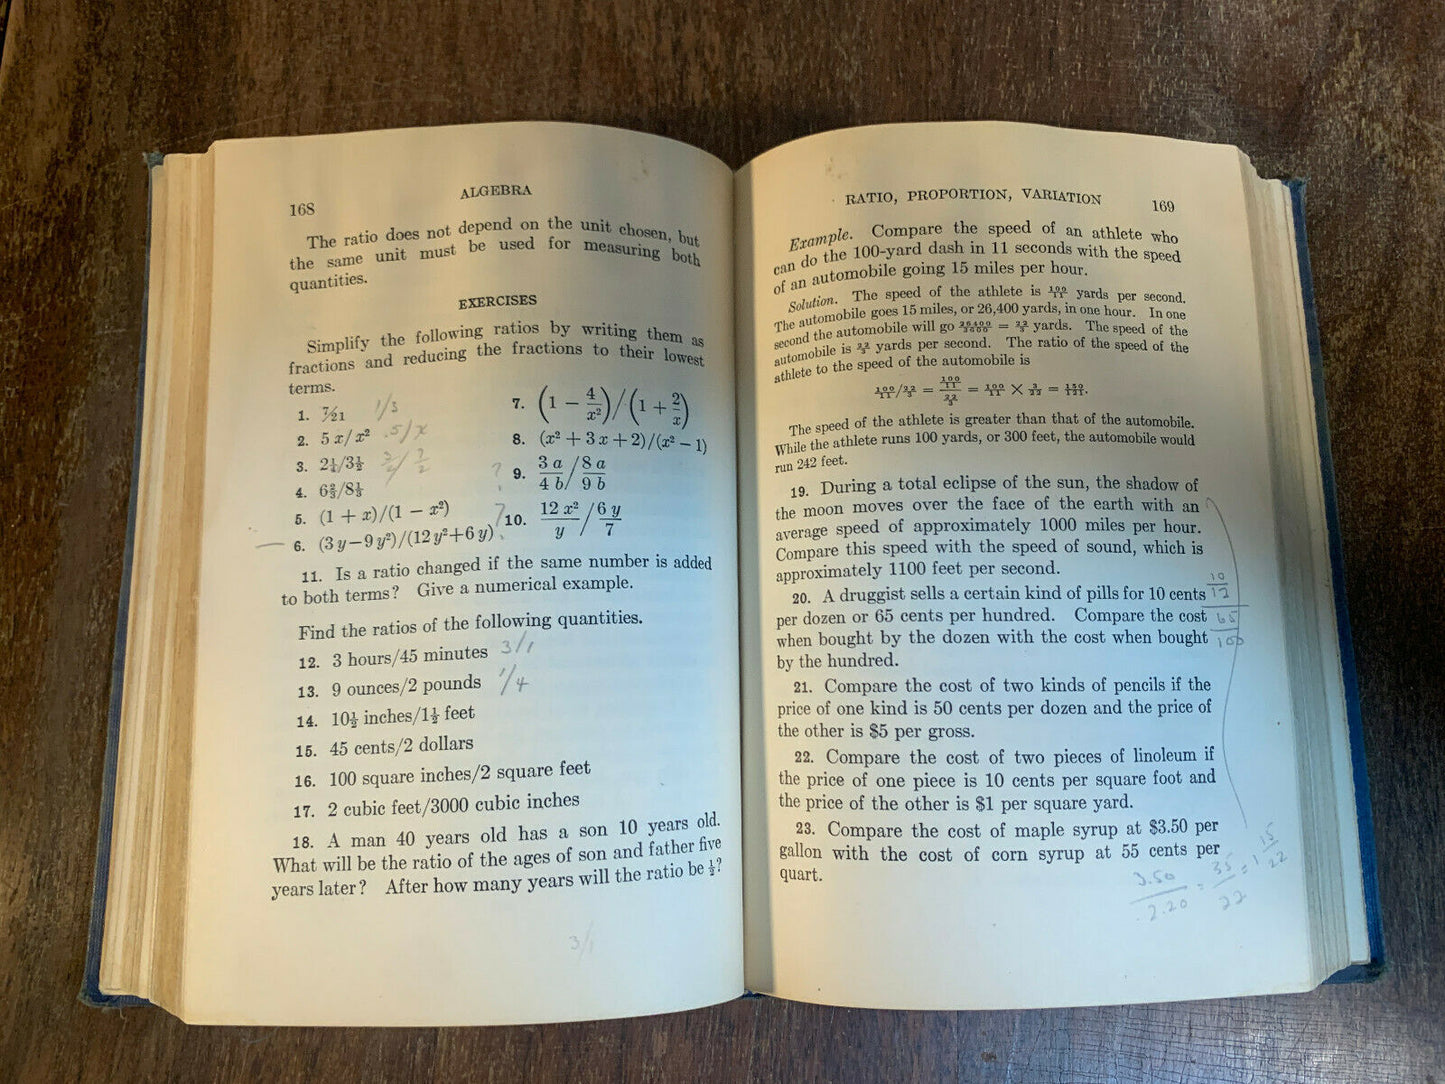 Algebra Book 2 by Longley and Marsh 1940 (HS9)